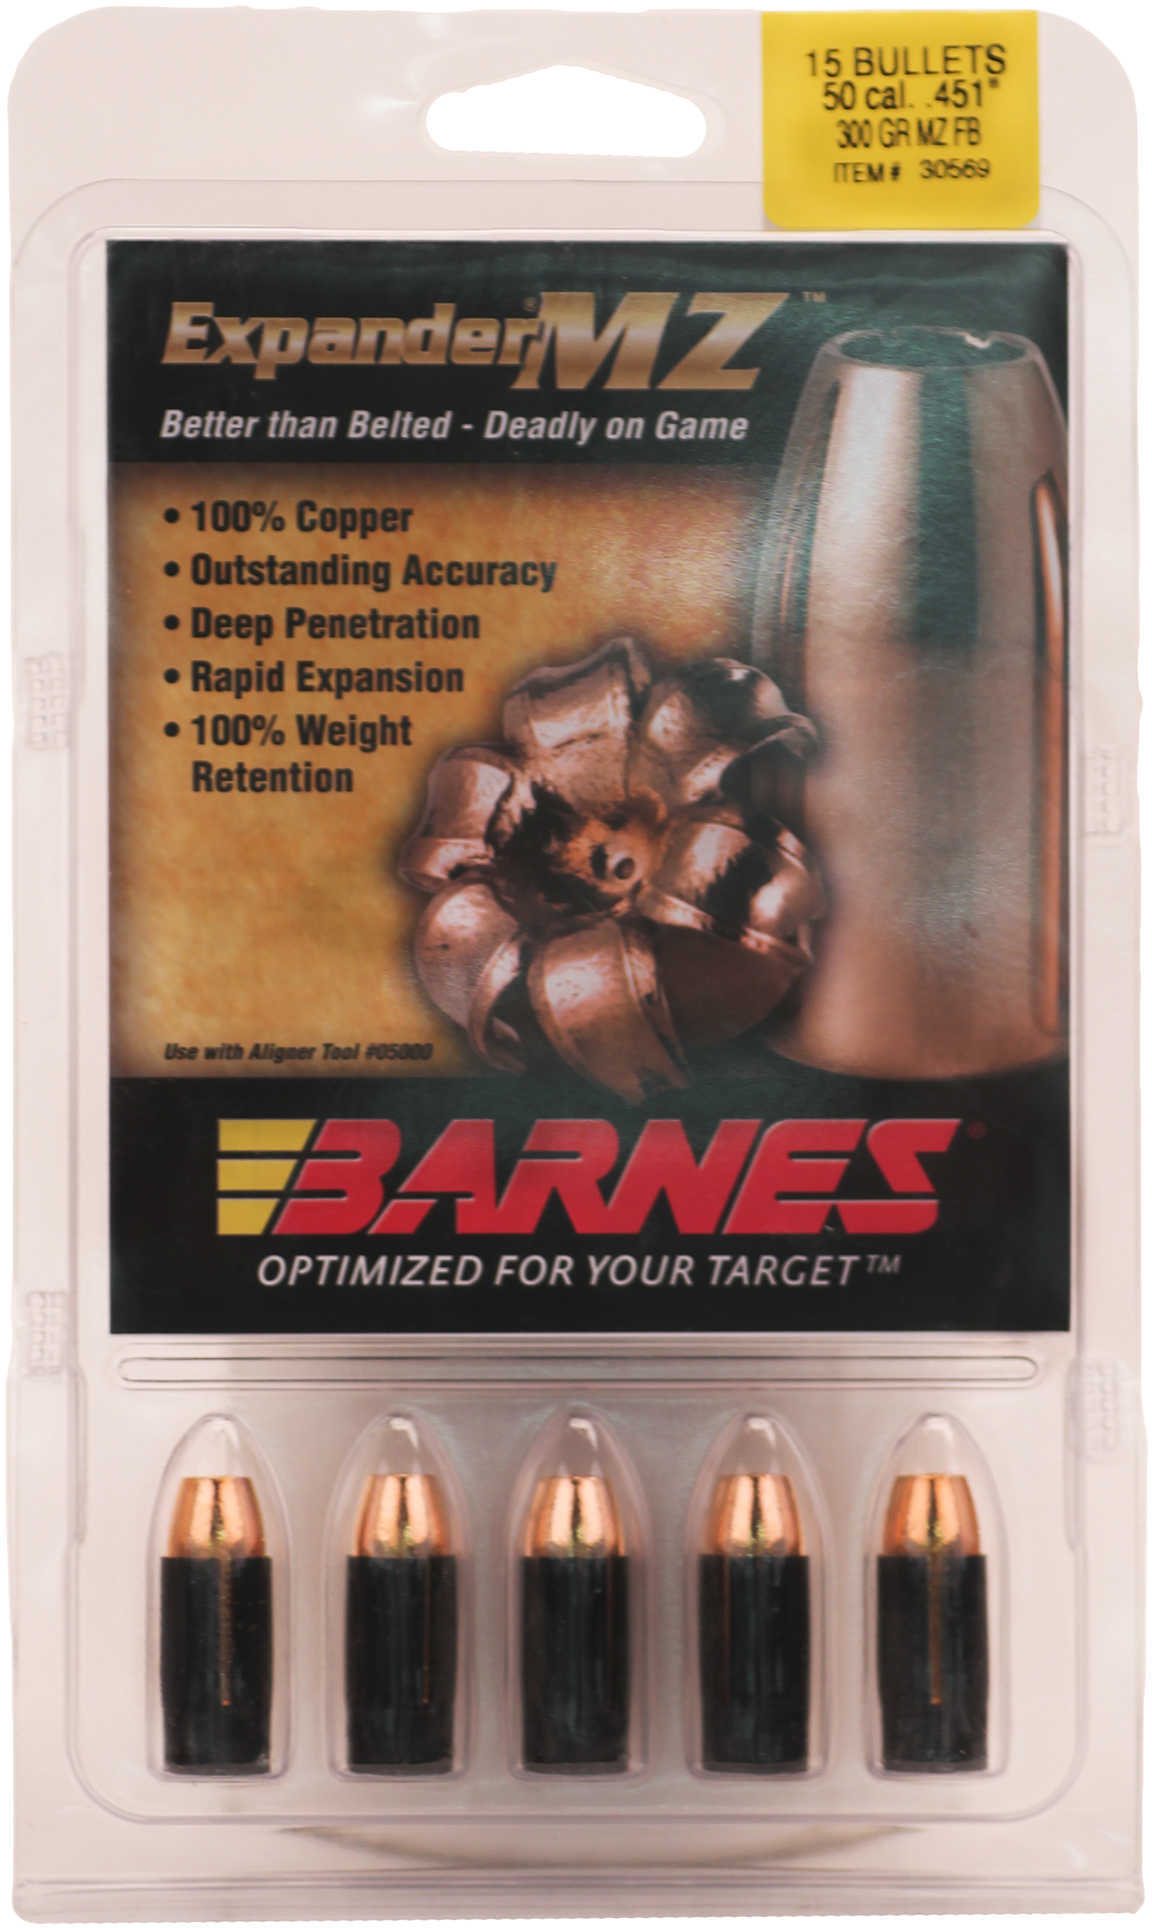 Barnes .50 Caliber .451" Diameter 300 Grain Expander MZ Hollow Point Flat Base Muzzleloading Bullet 15 Count 45131